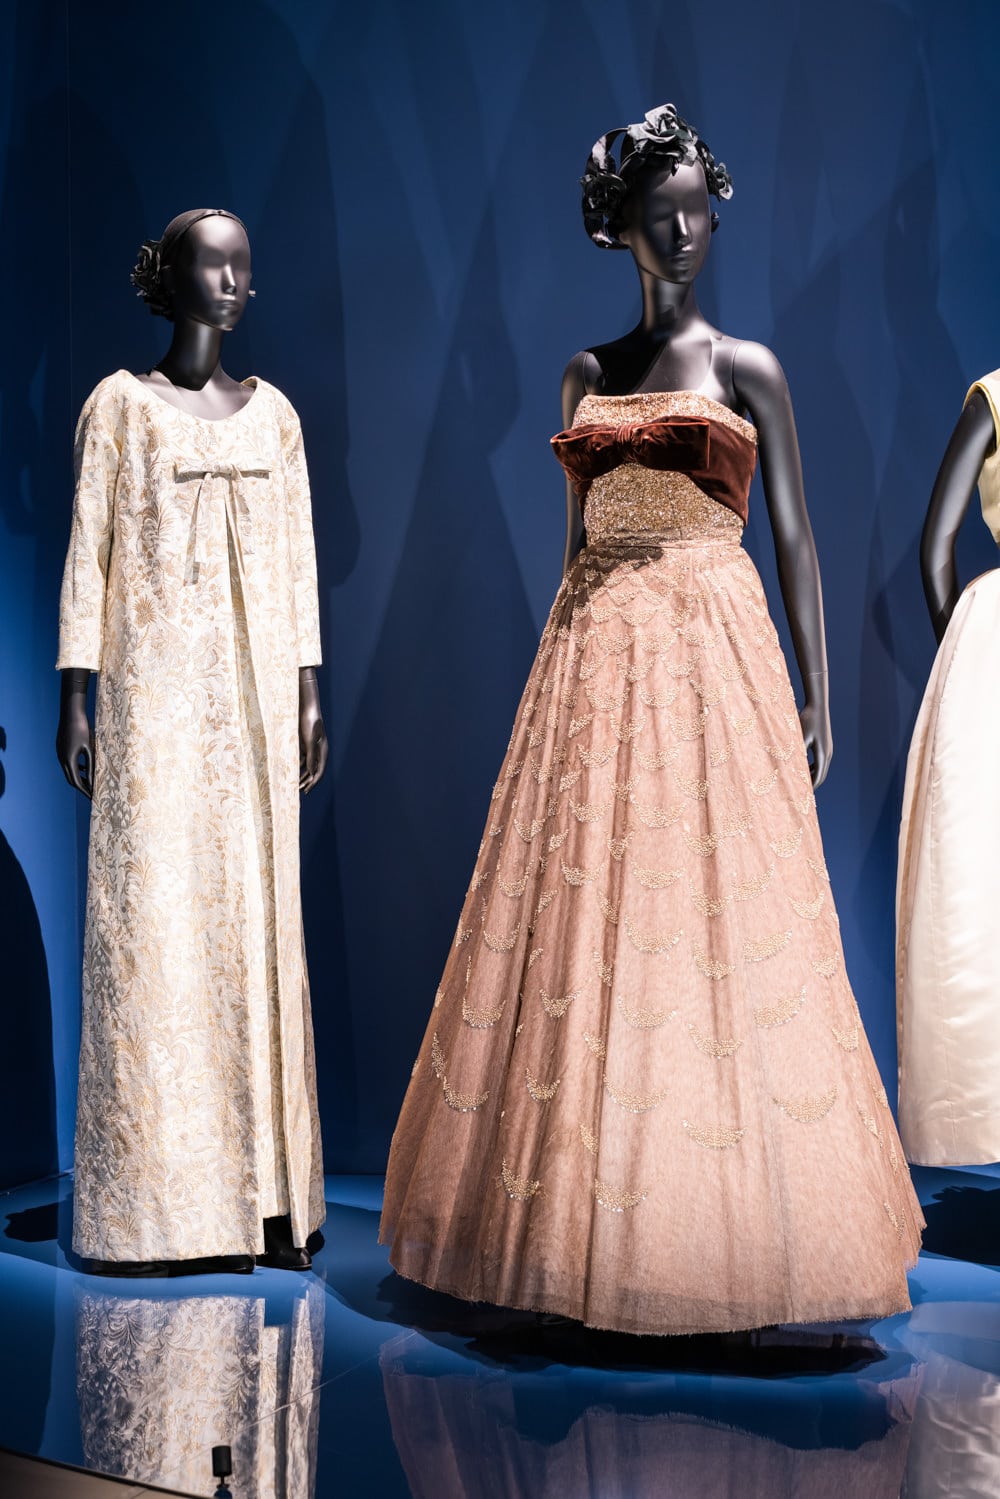 Christian Dior: Designer of Dreams, Exhibitions